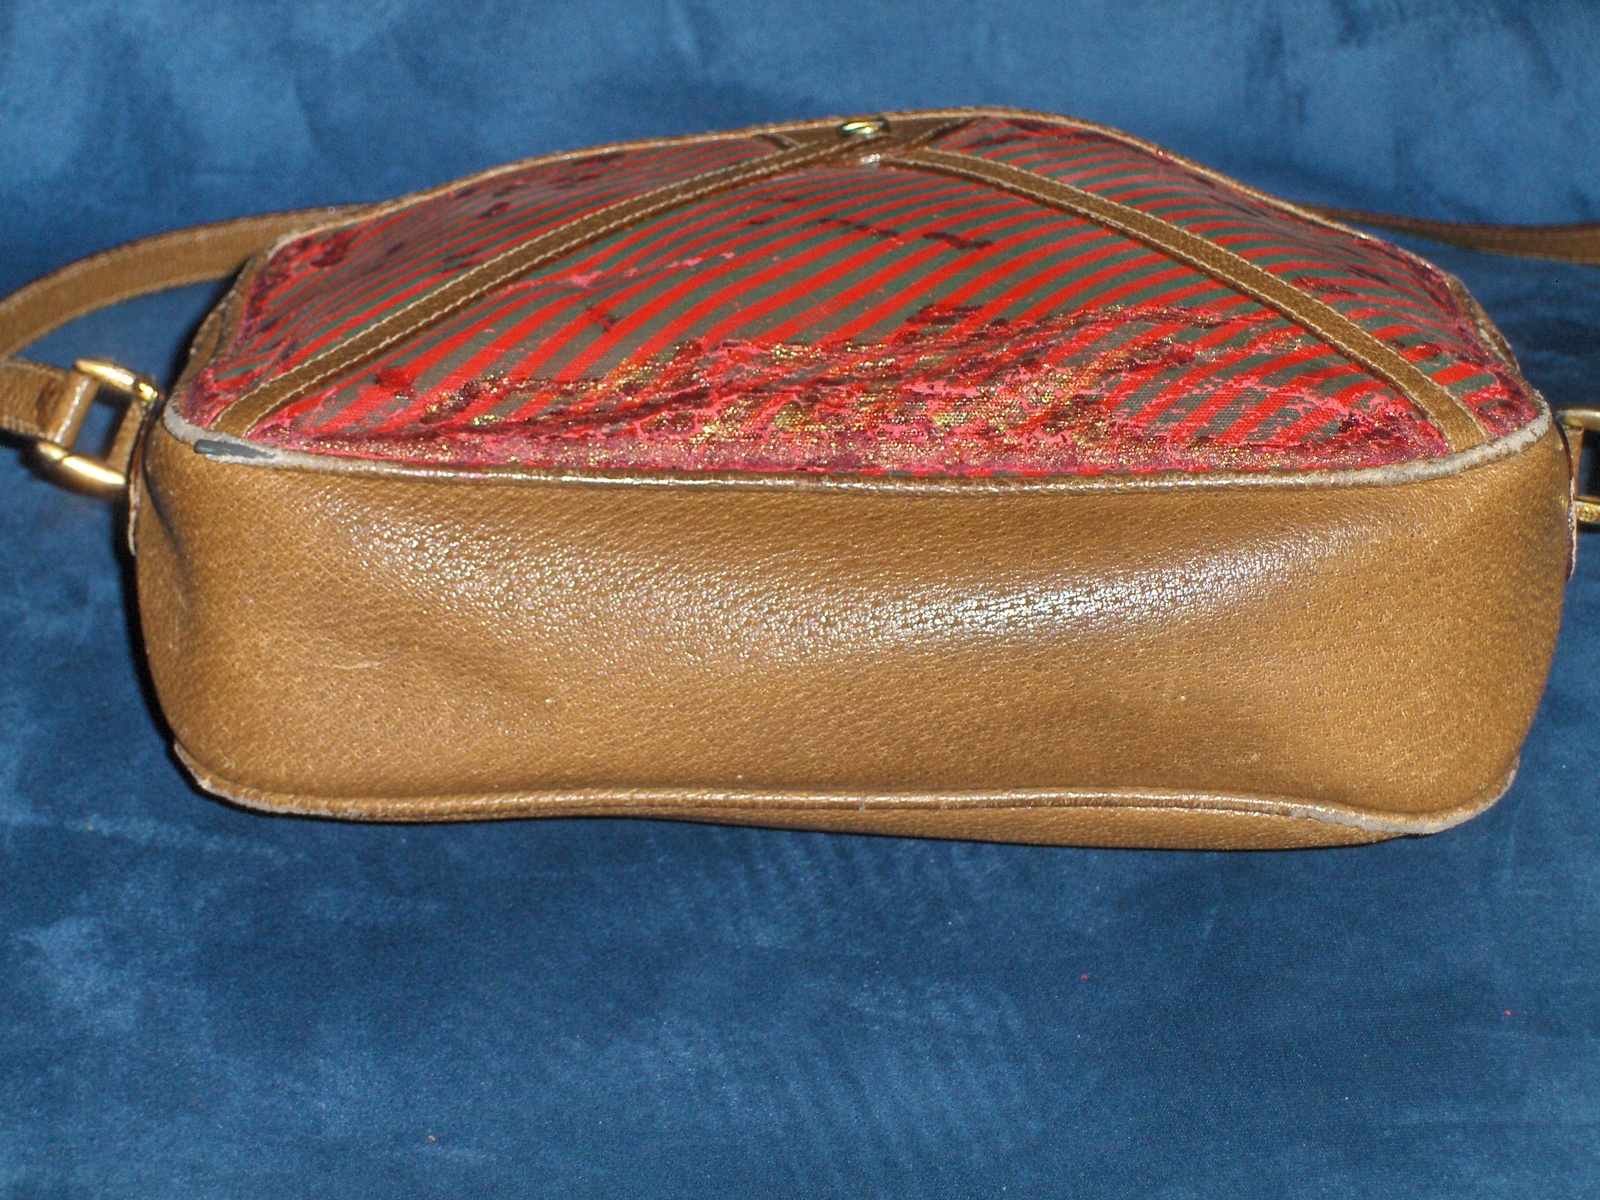 Vintage Gucci Red Shoulder Bag Purse Distressed - Handbags & Purses